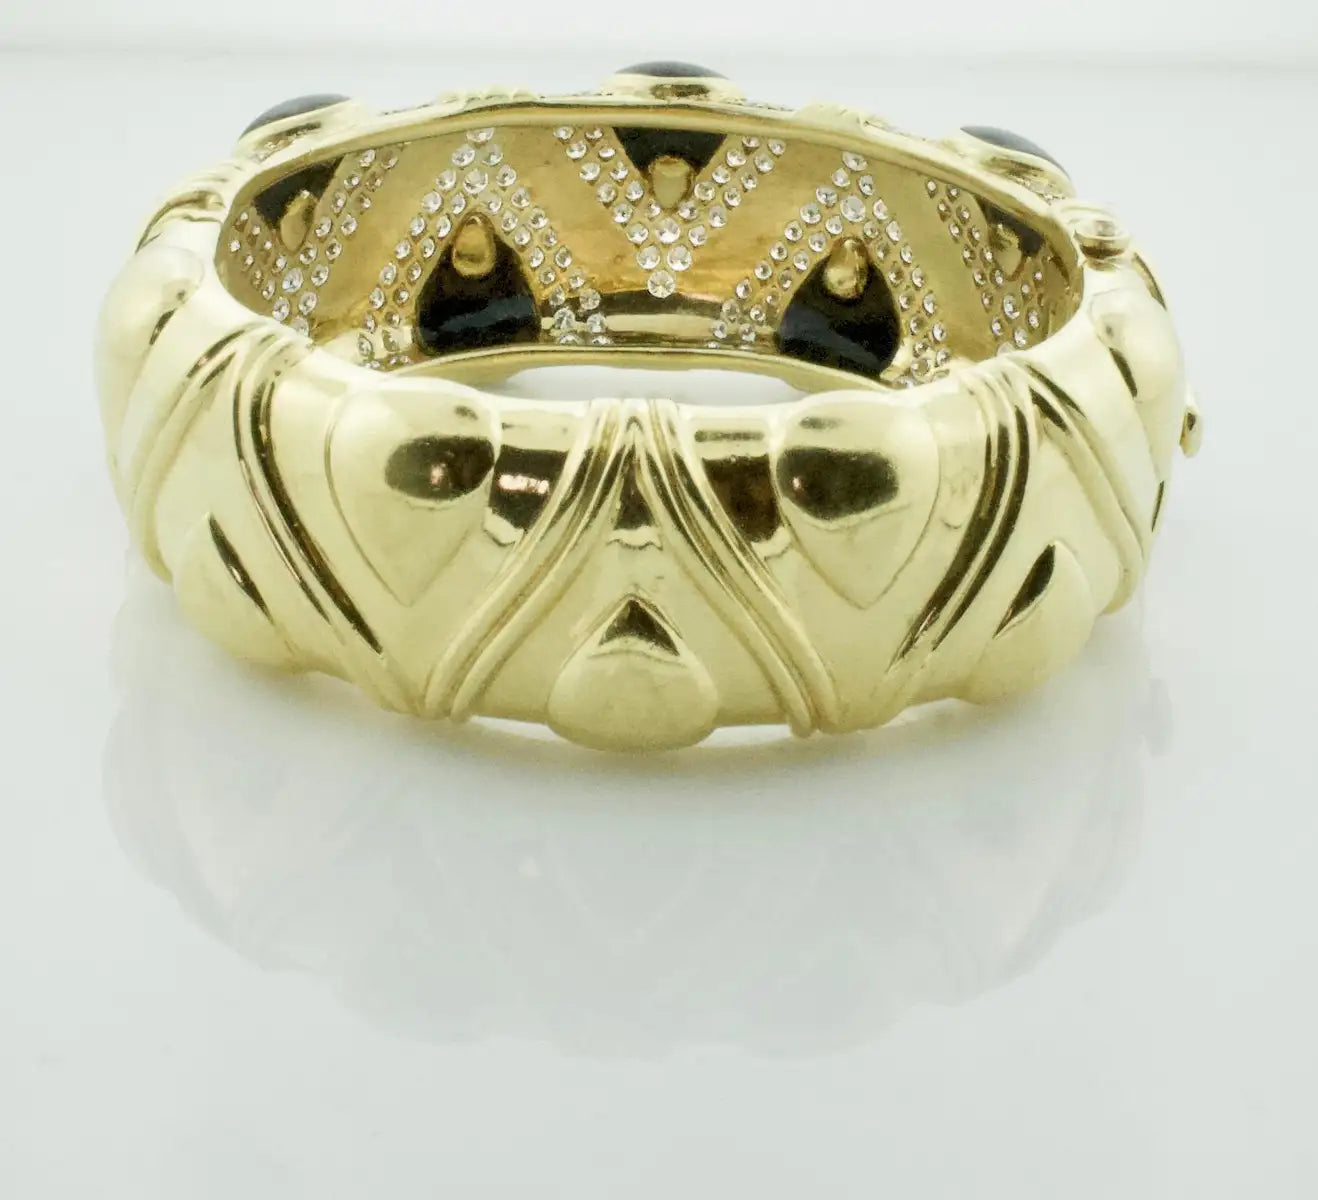 Massive Onyx and Diamond Bracelet in 18k by Gemlok